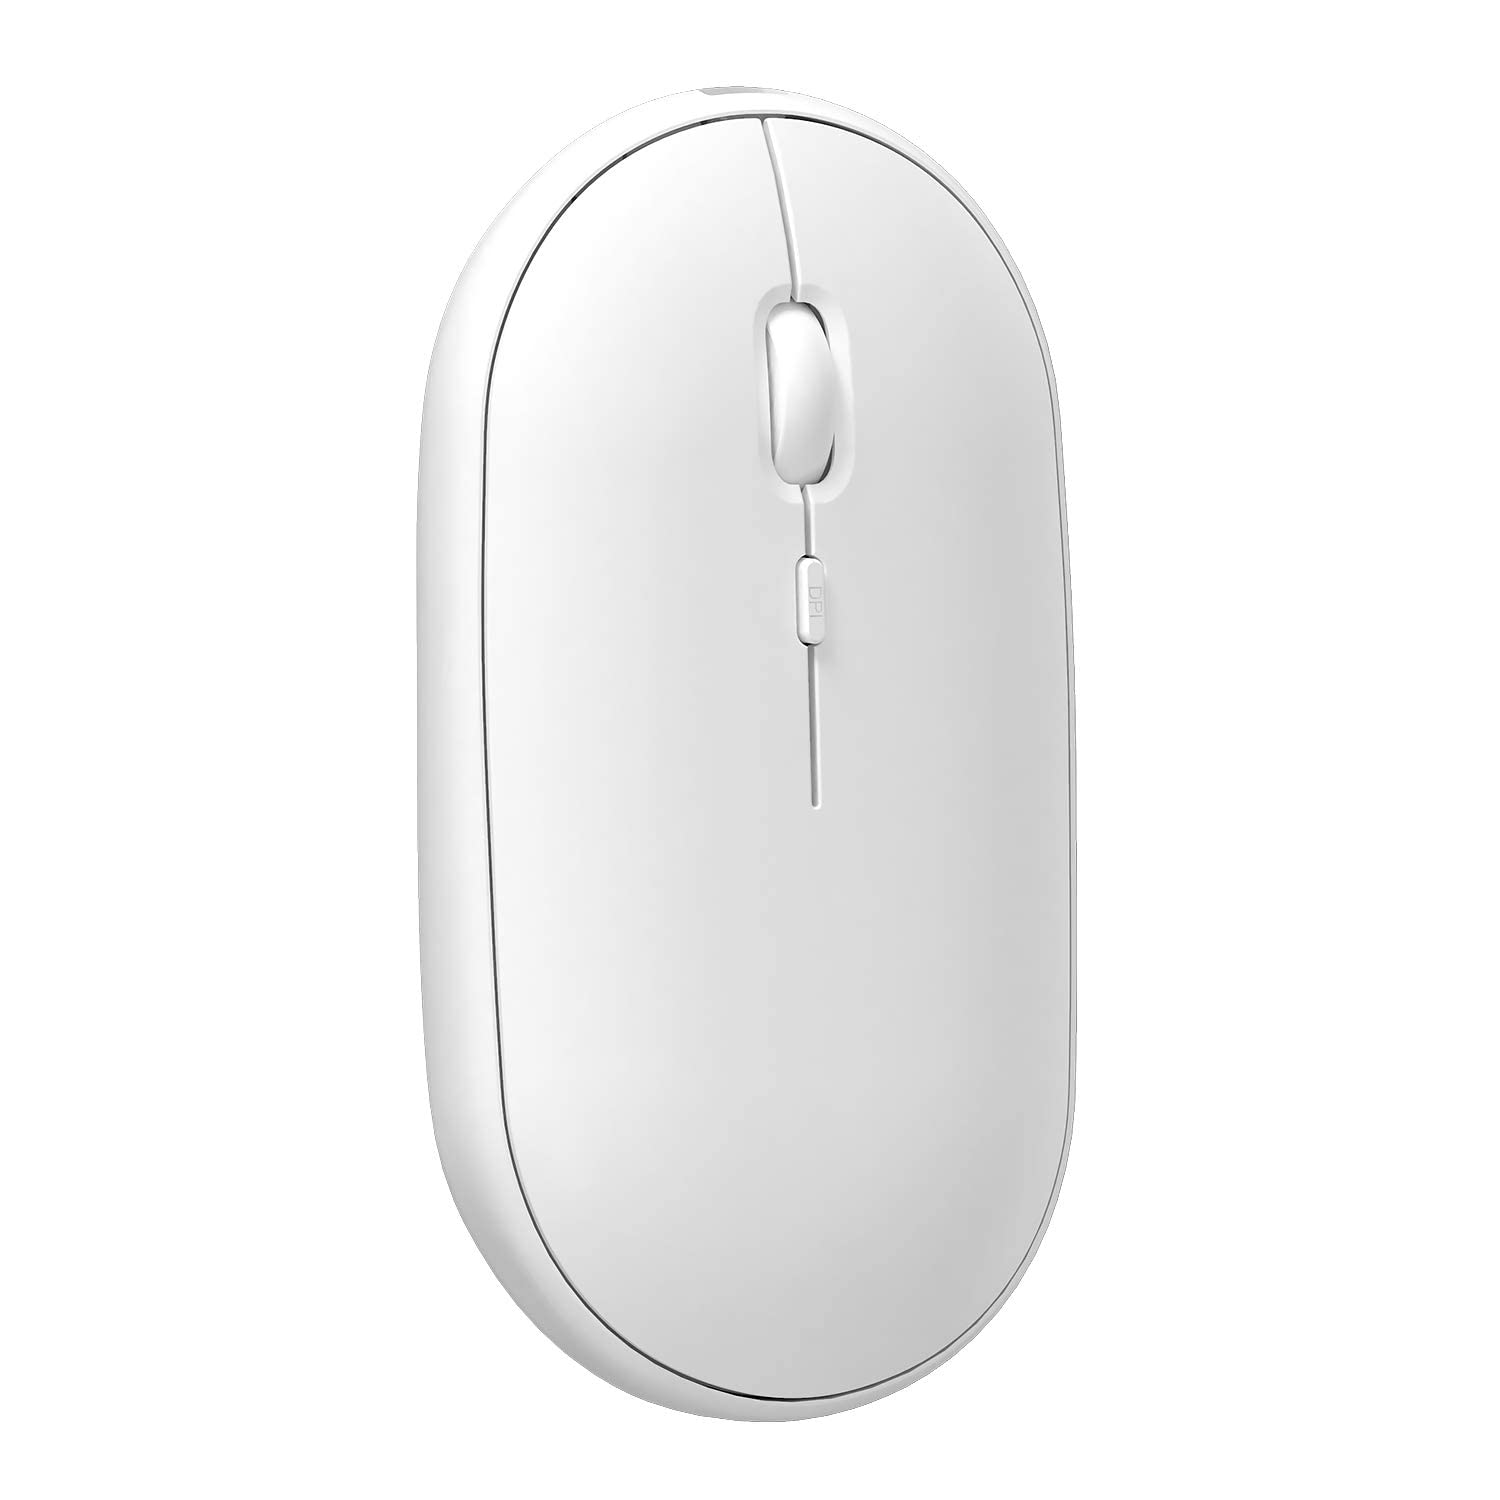 AmeToNana 雨七 ワイヤレスマウス Bluetooth マウス MouseMaster 静音マウス 小型 薄型 3DPI（ 800-1200-2000 ） 充電式 省エネルギー高精度 Windows/Mac/Chrome/Android/Surface/iPad OS 対応 (White, Type-C充電)